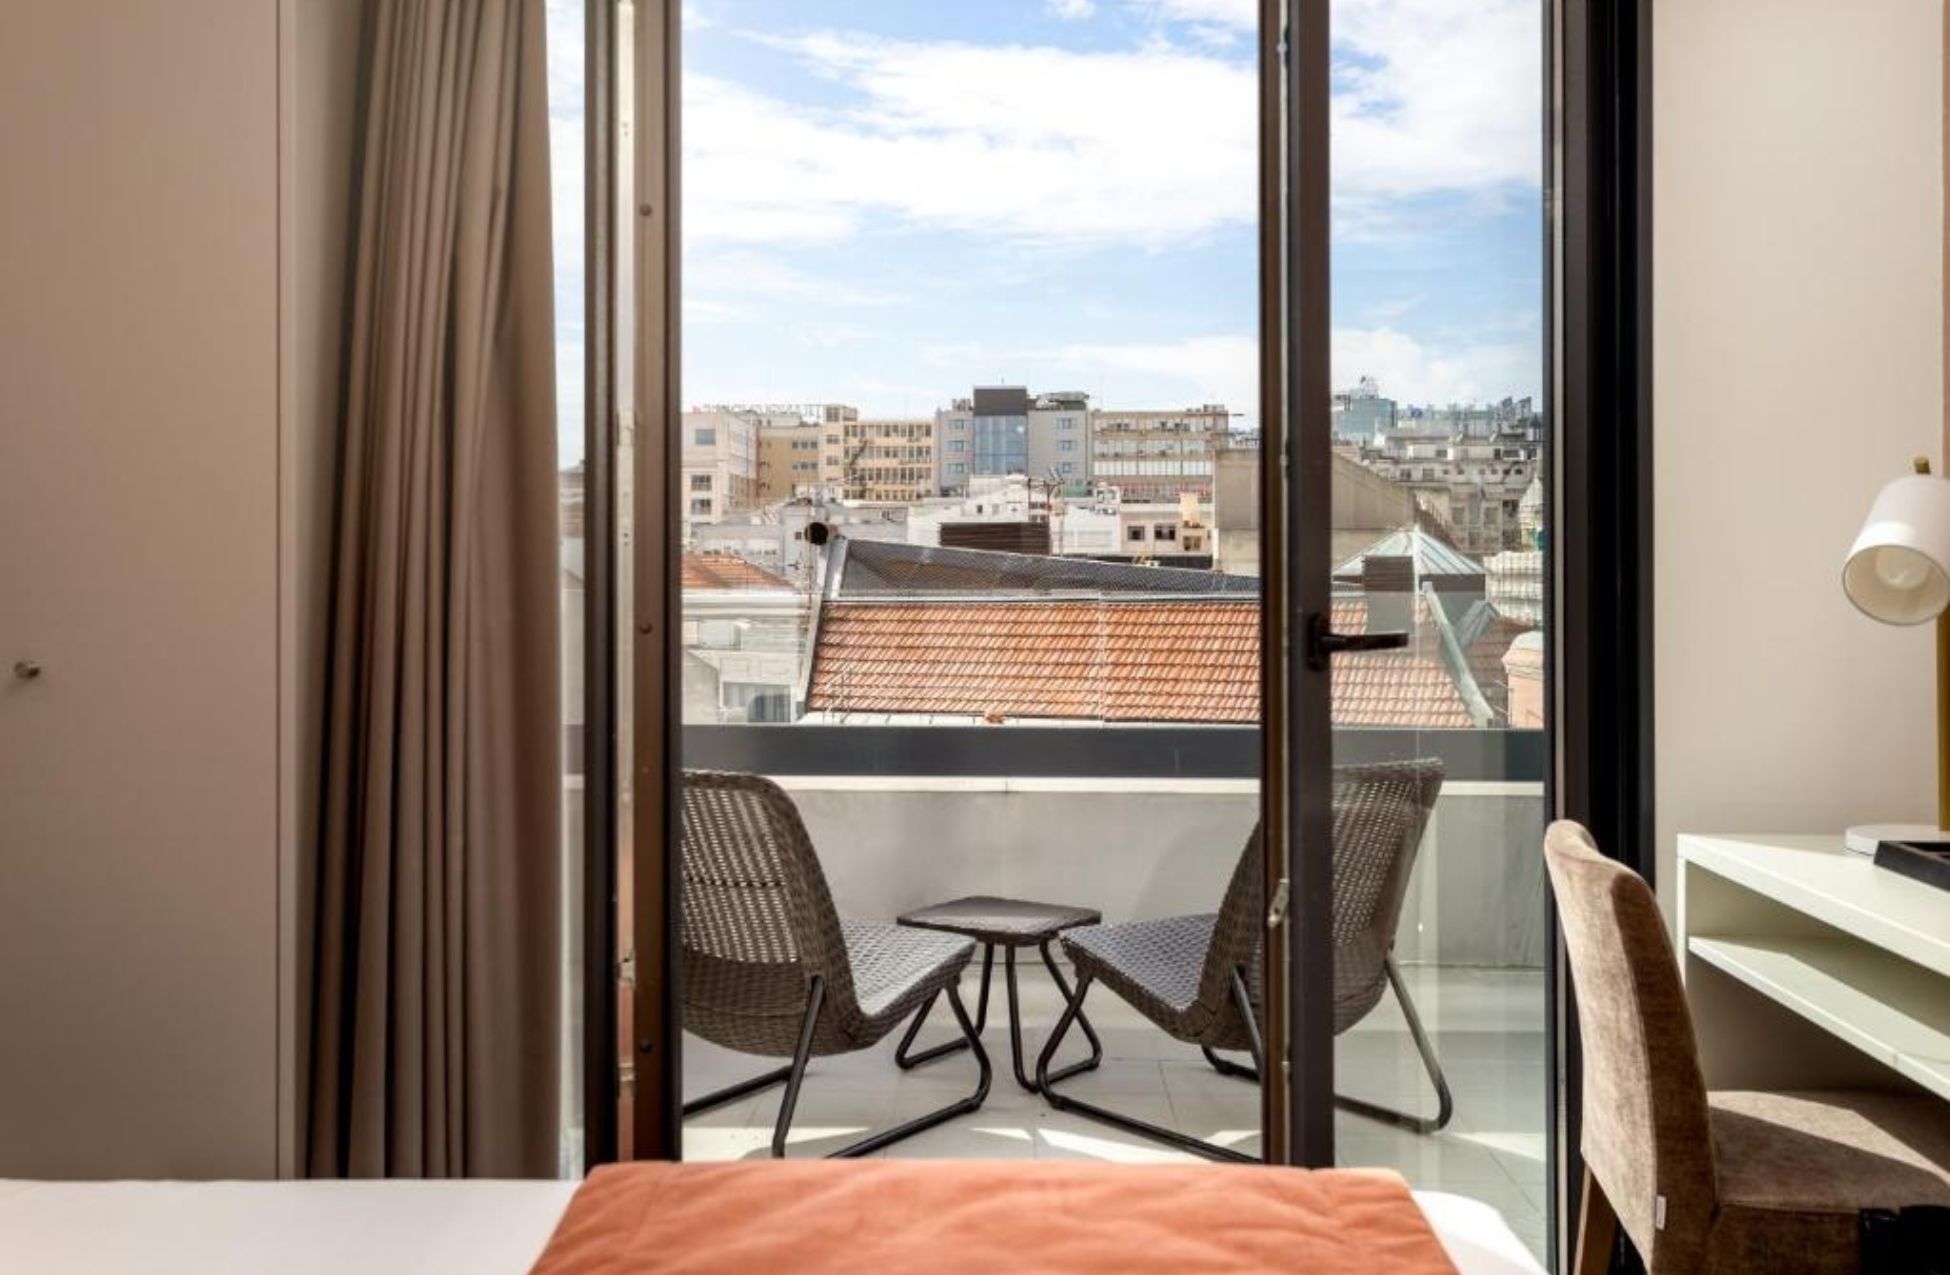 Empire Marquês Hotel - Best Hotels In Lisbon